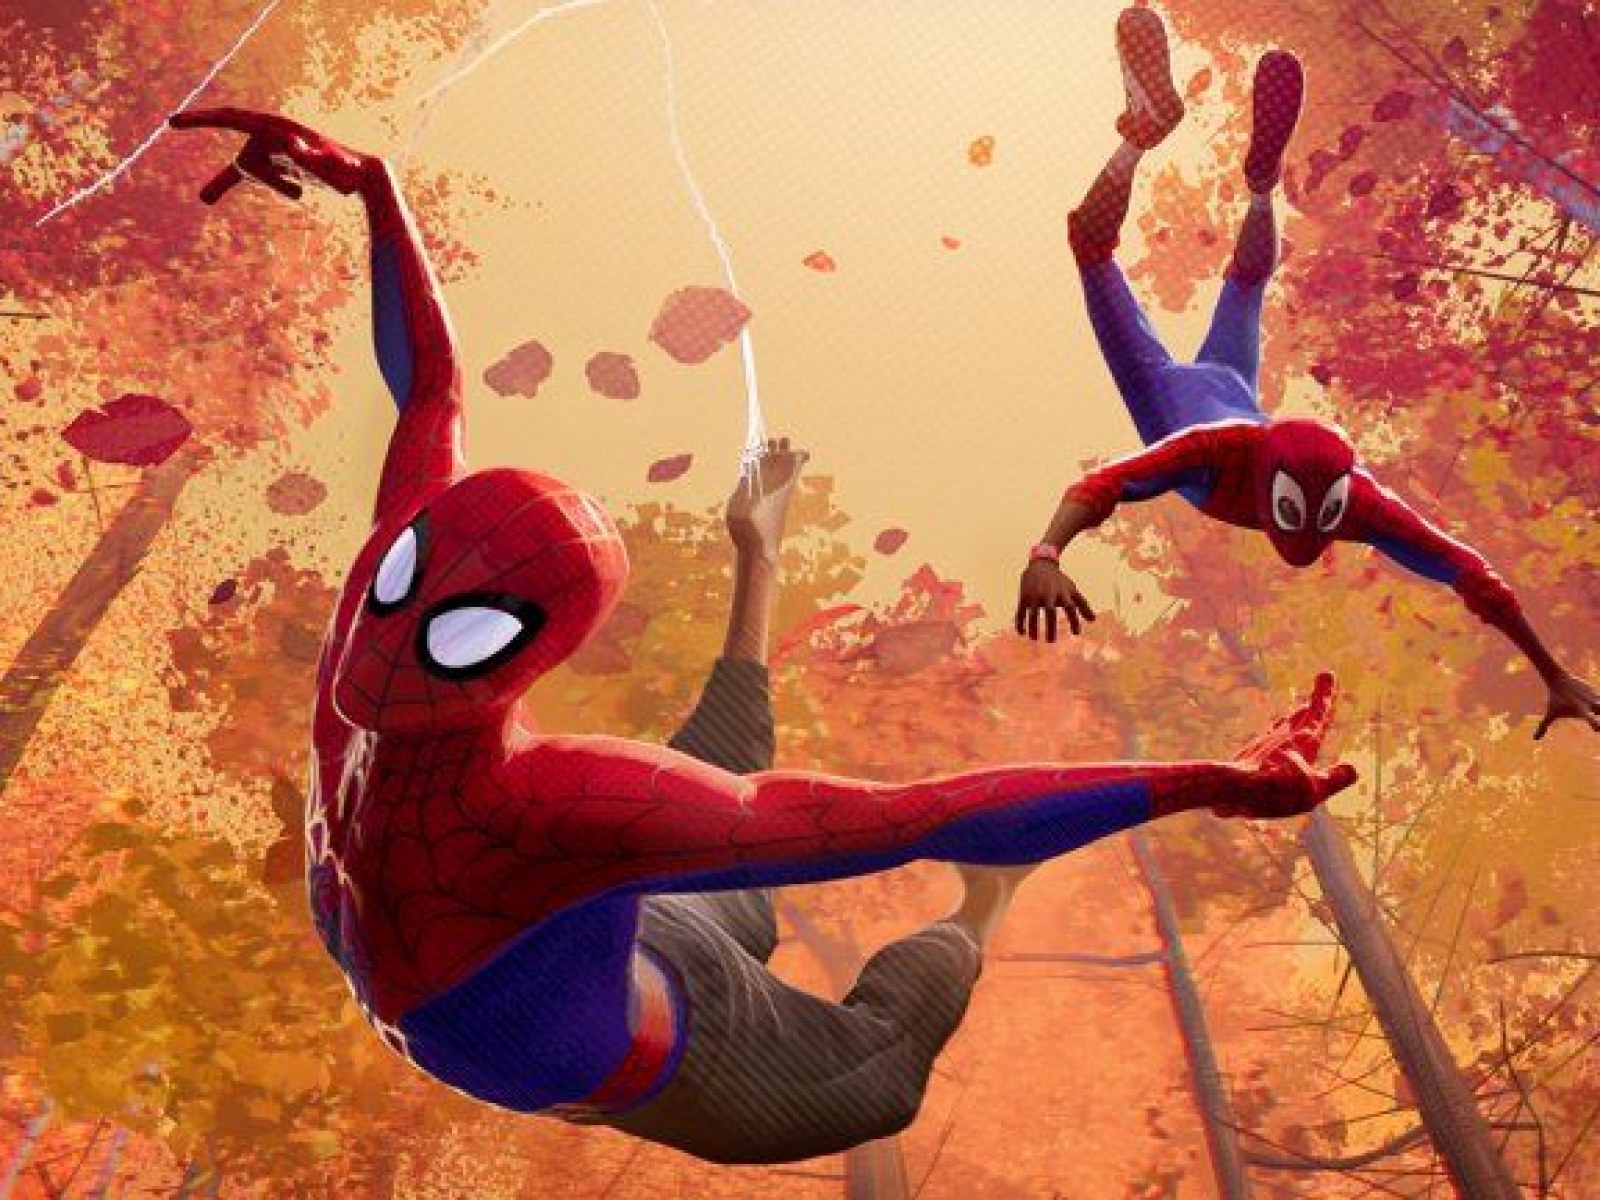 Spider-Man: Across the Spider-Verse Netflix Streaming Date